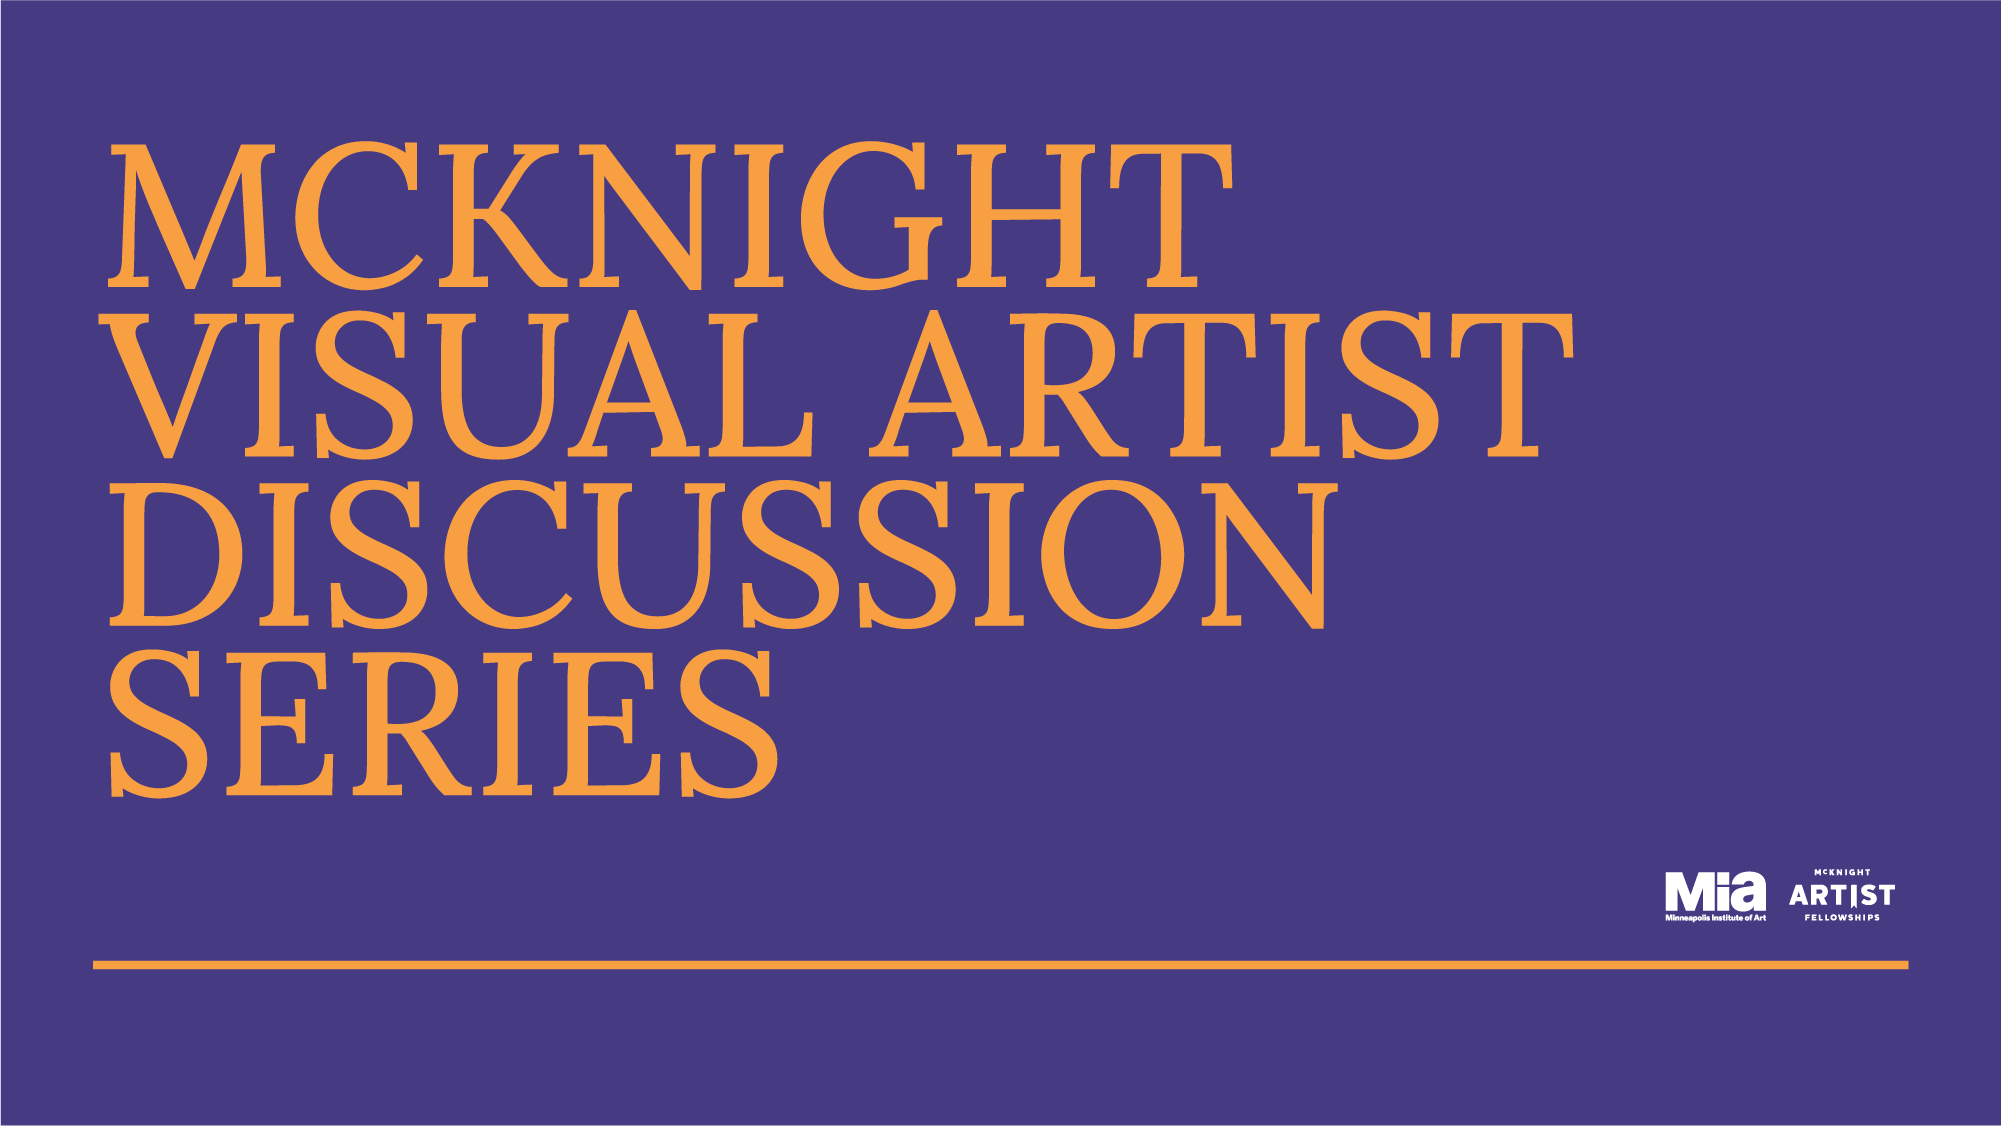 McKnight Visual Artist Discussion Series